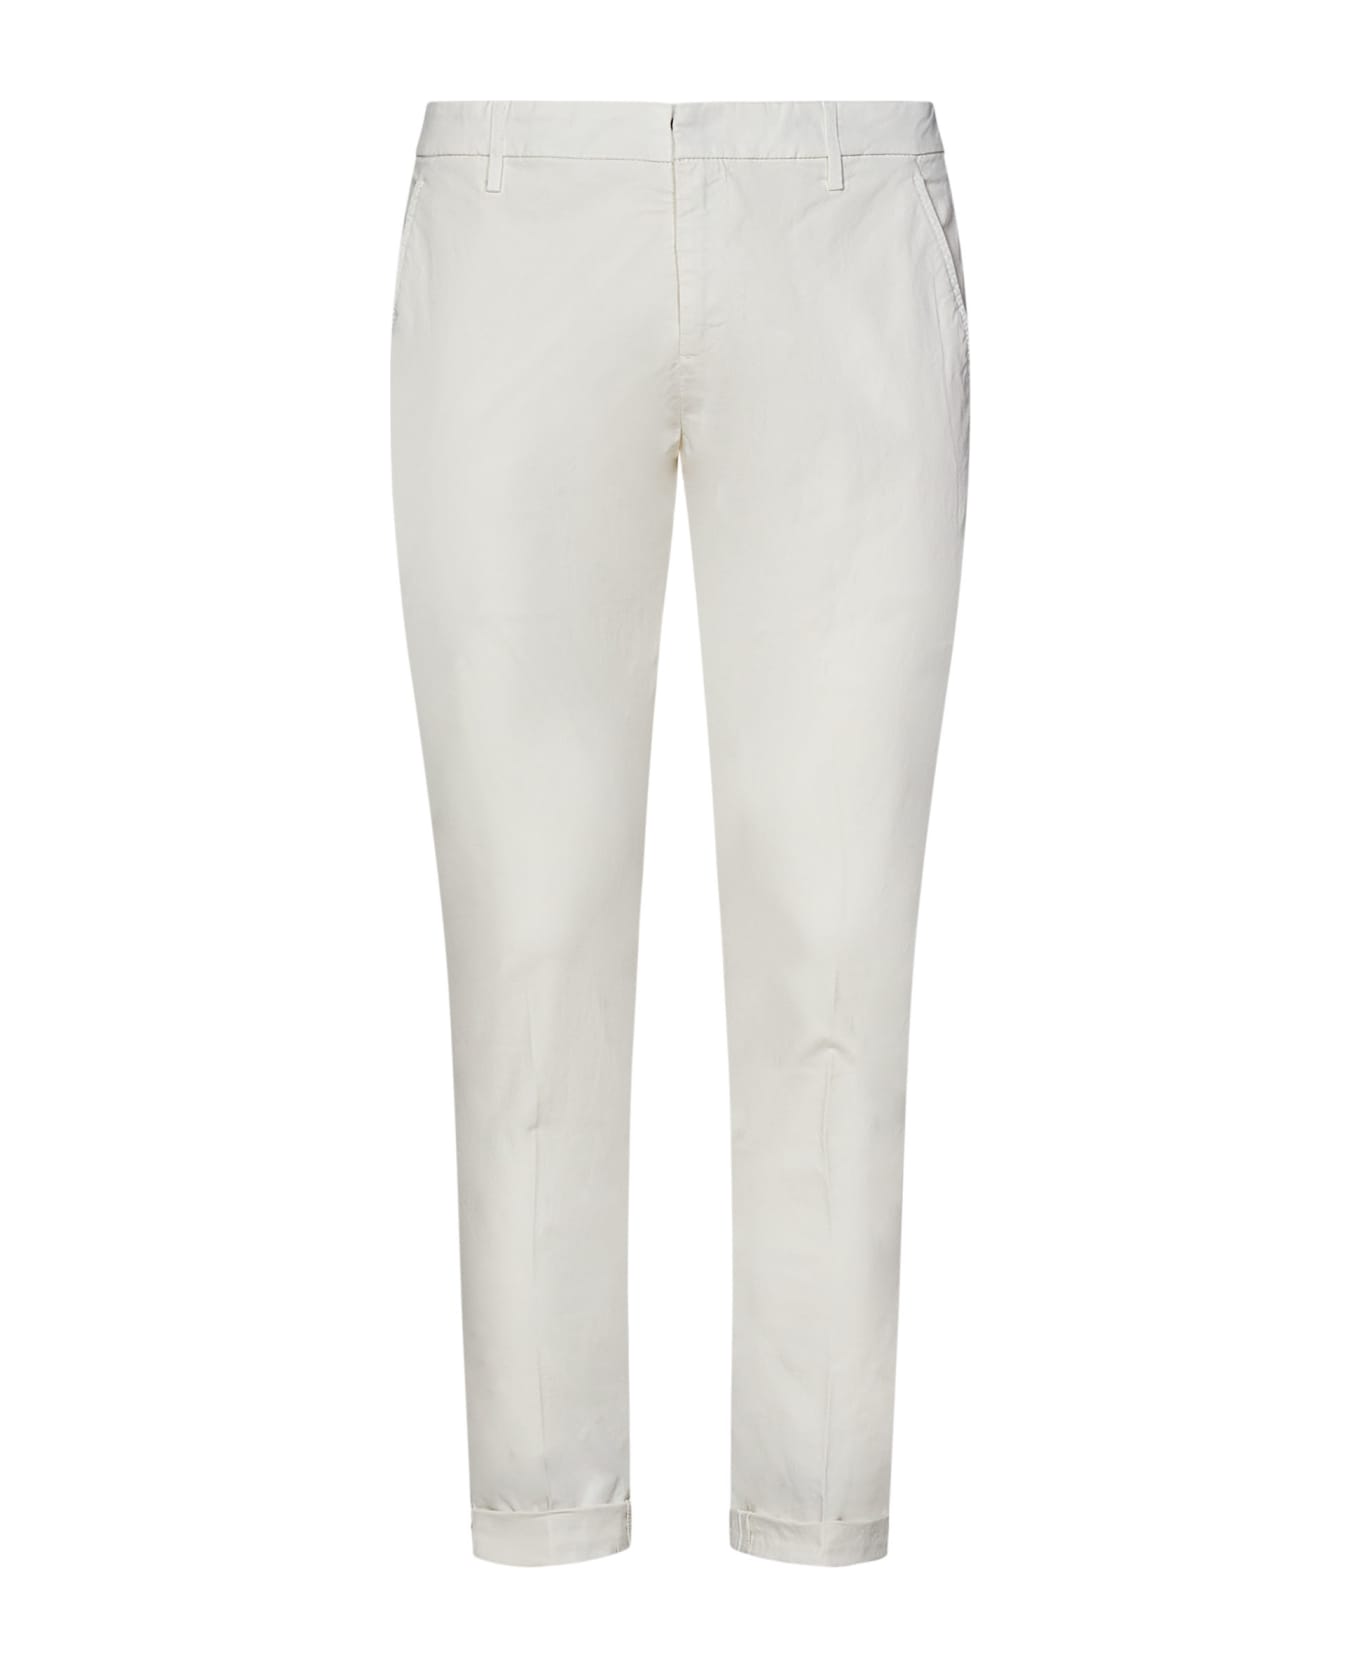 Dondup Gaubert Jeans - White デニム